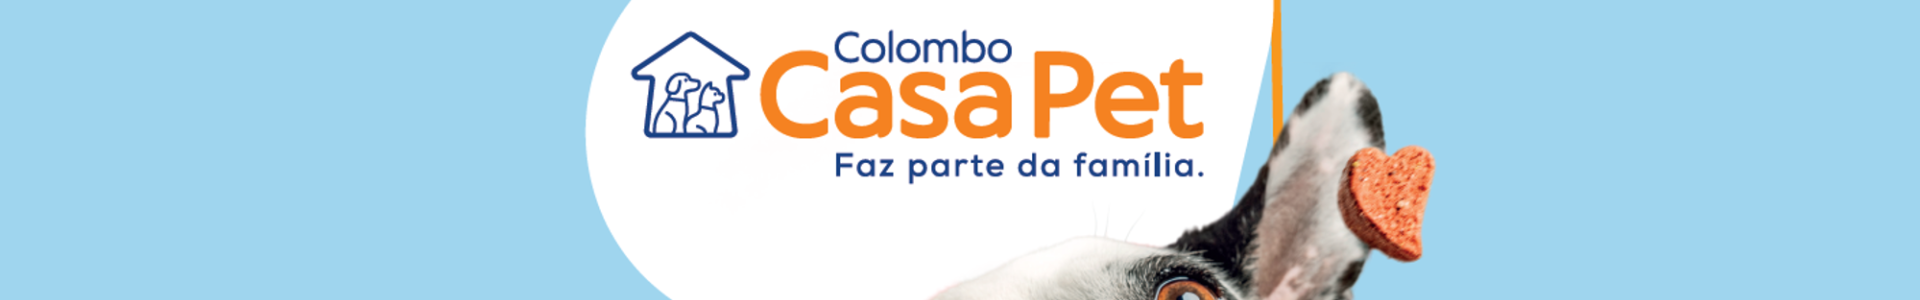 COLOMBO CASA PET